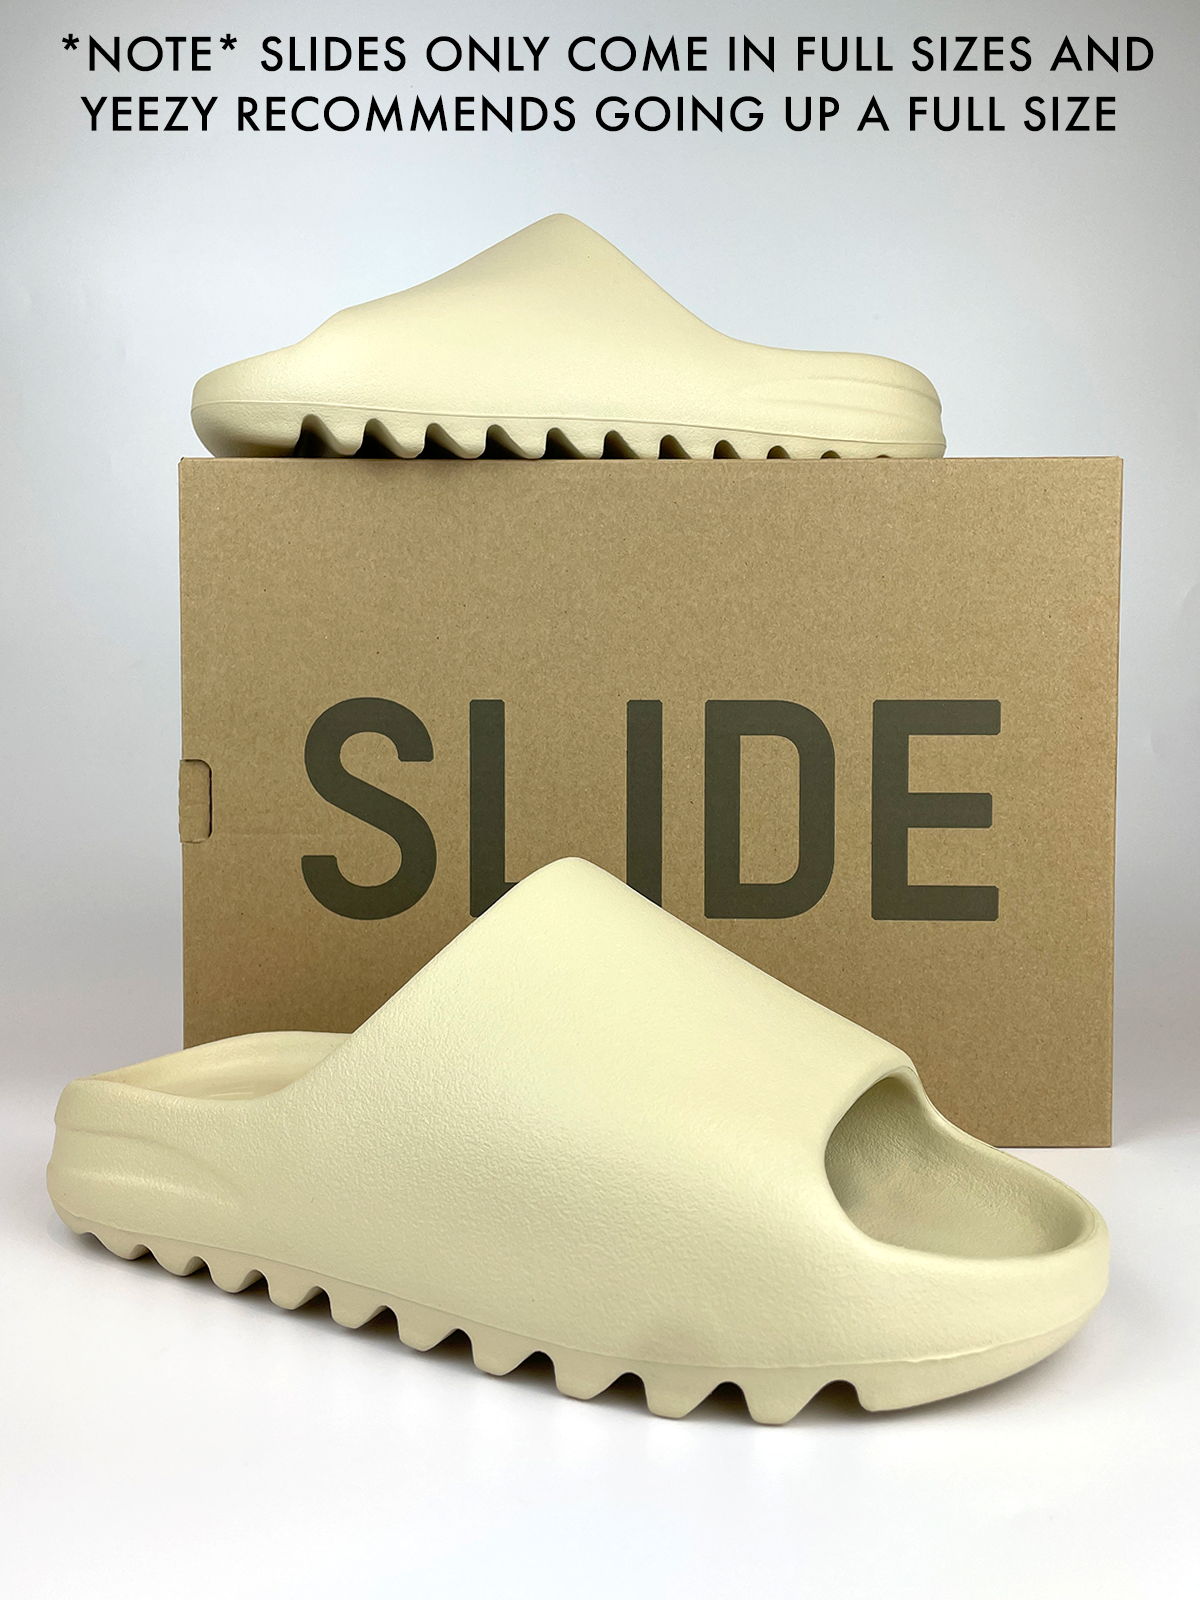 Yeezy Slide Bone